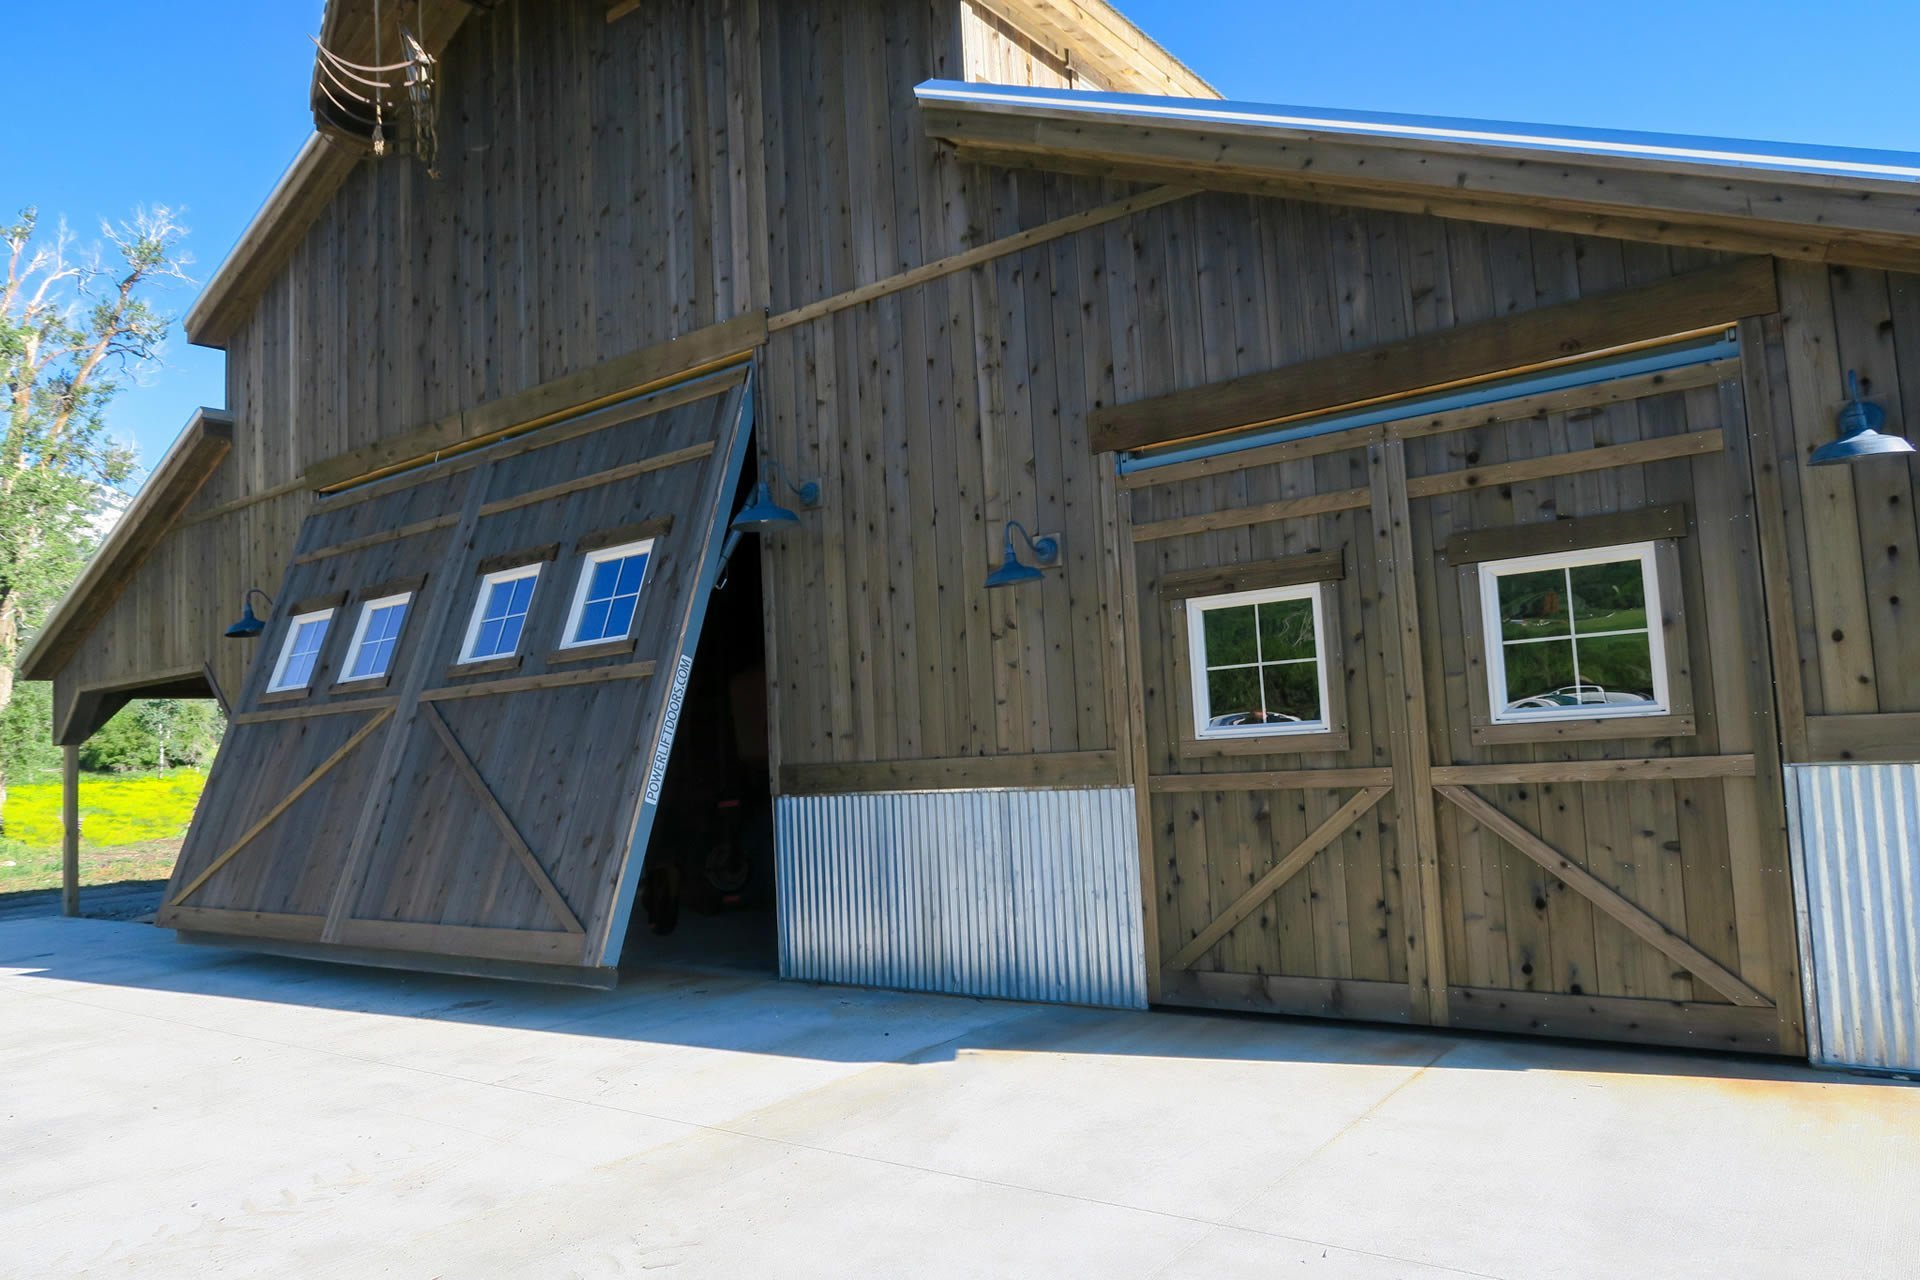 Barn Doors With Rustic Wood Siding.